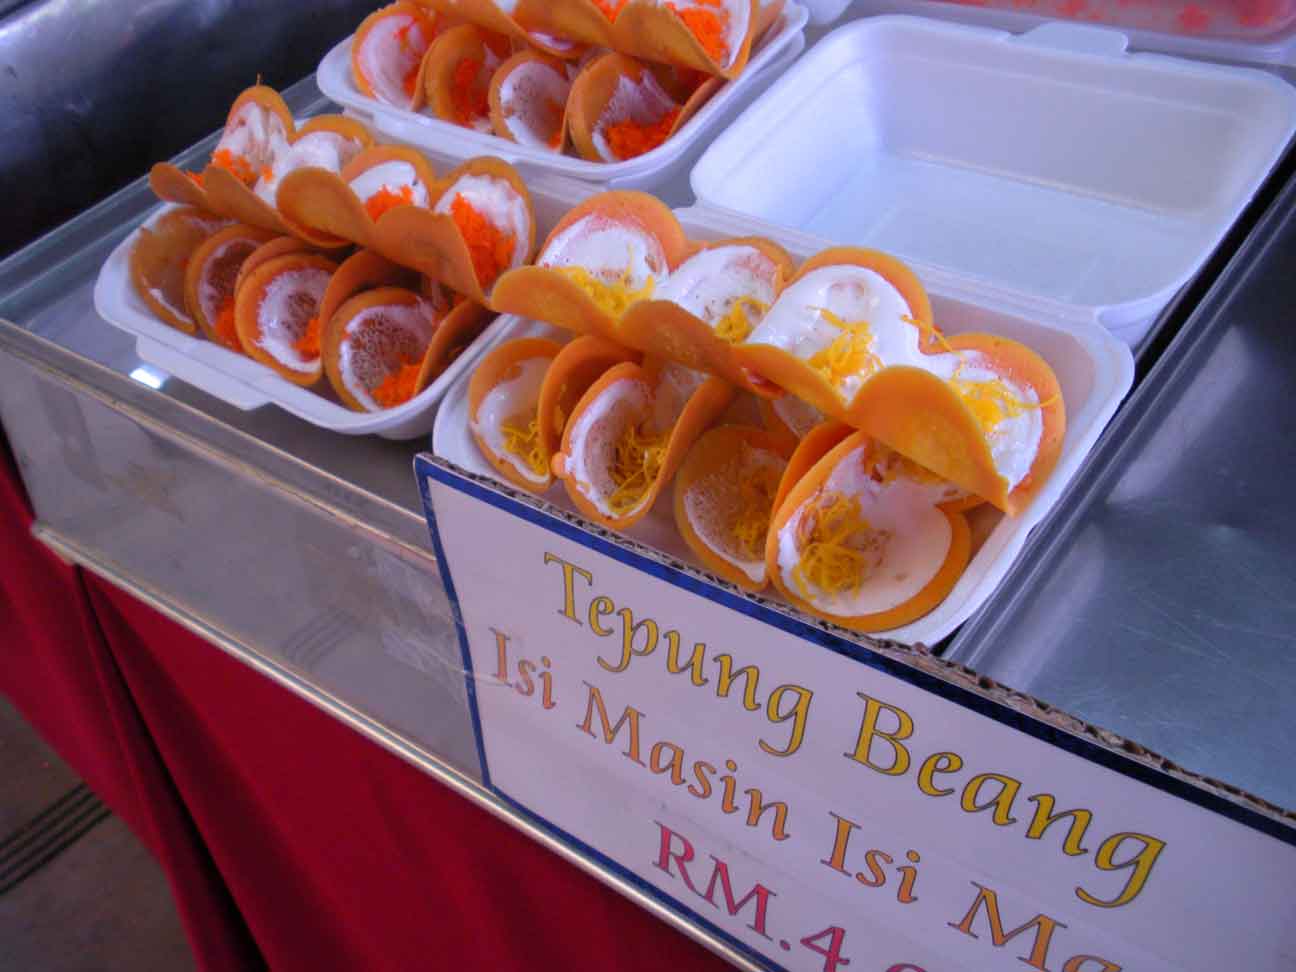 Thai Fair - snacks